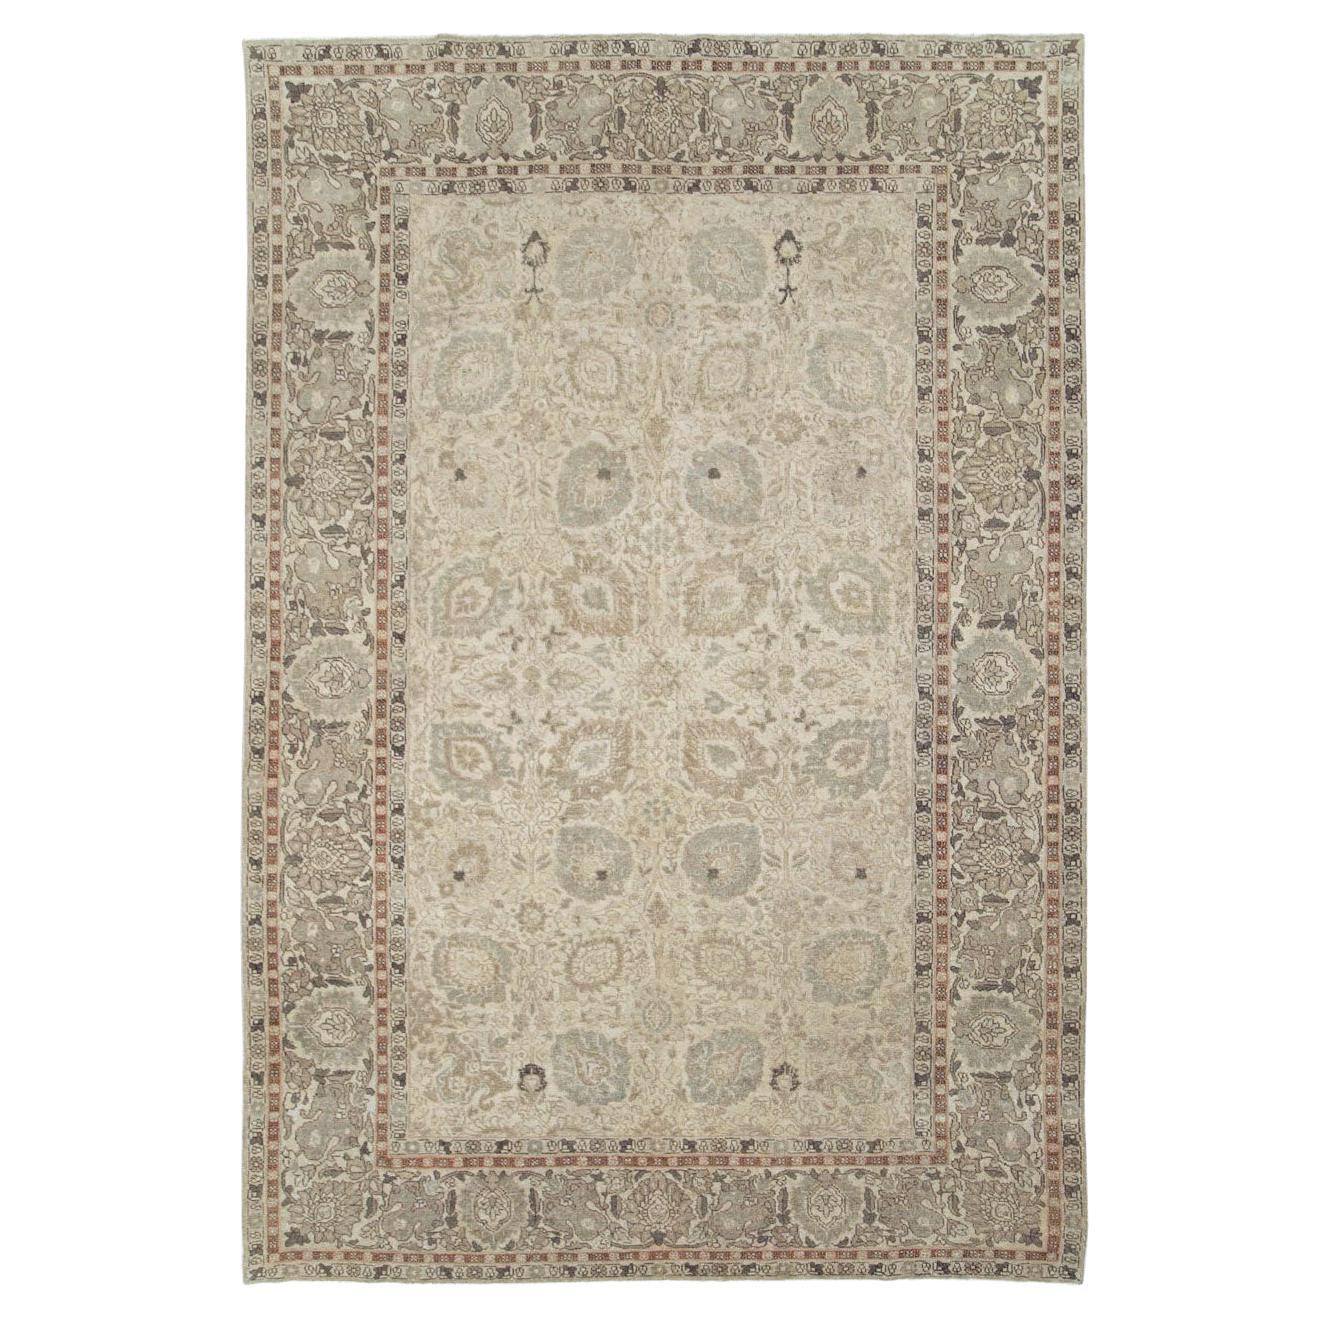 Early 20th Century Handmade Persian Tabriz Small Room Size Carpet